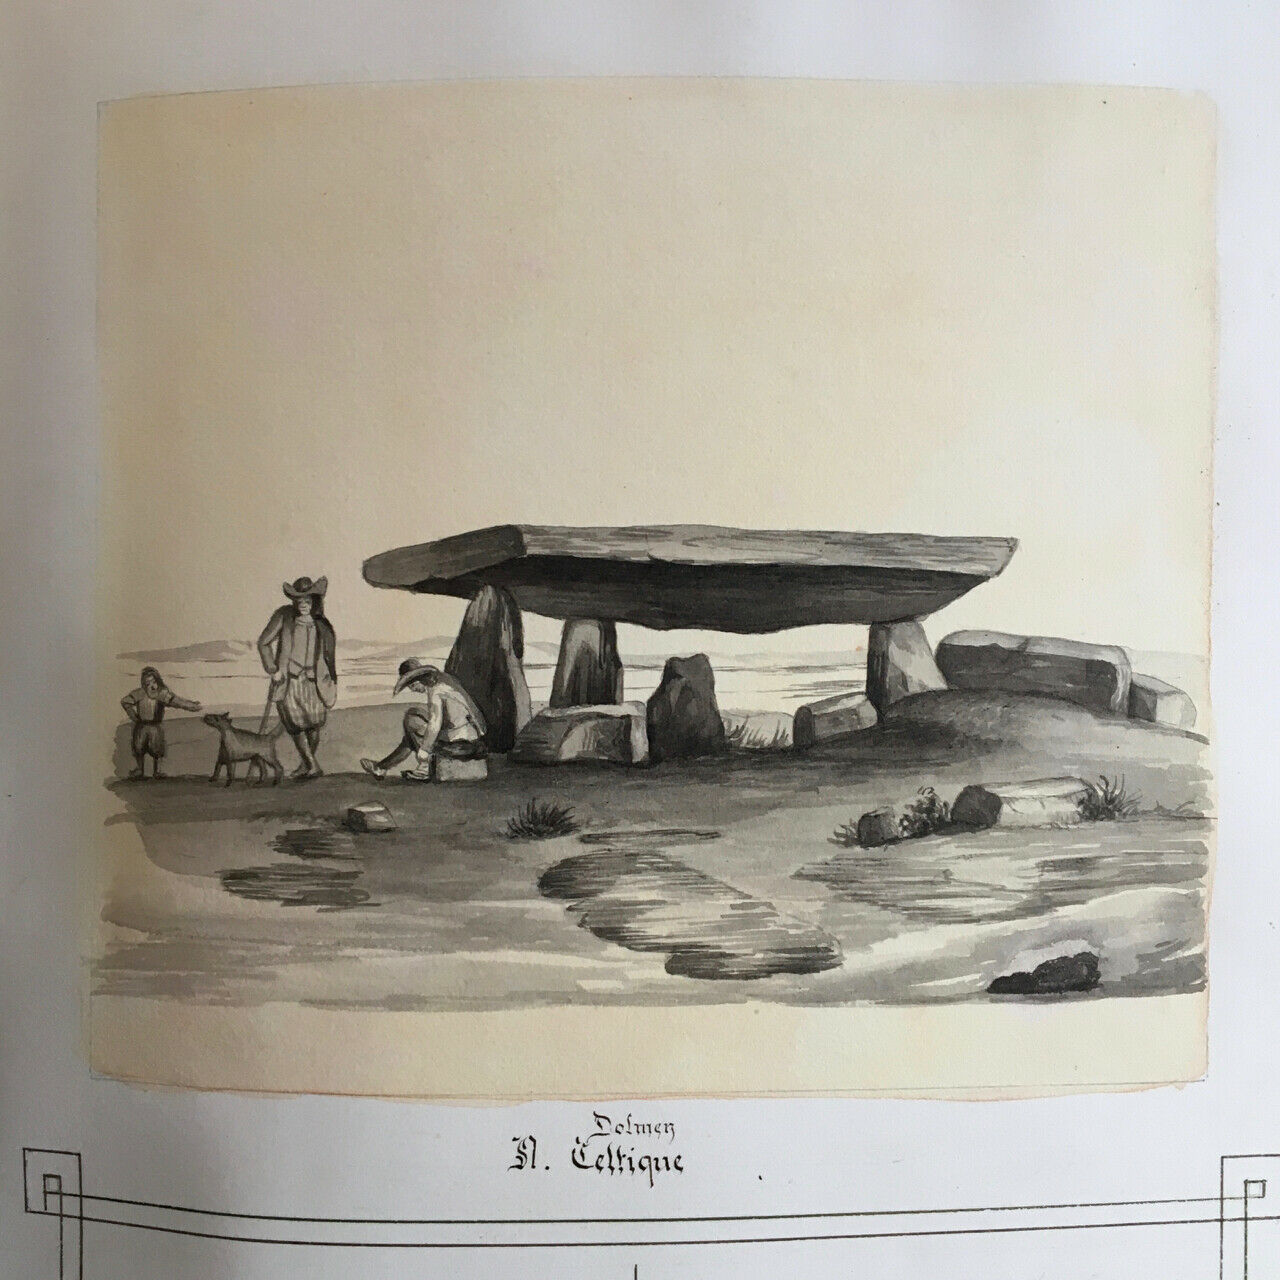 Album d'aquarelles d'architecture, œuvre d'une jeune aristocrate belge — c. 1850